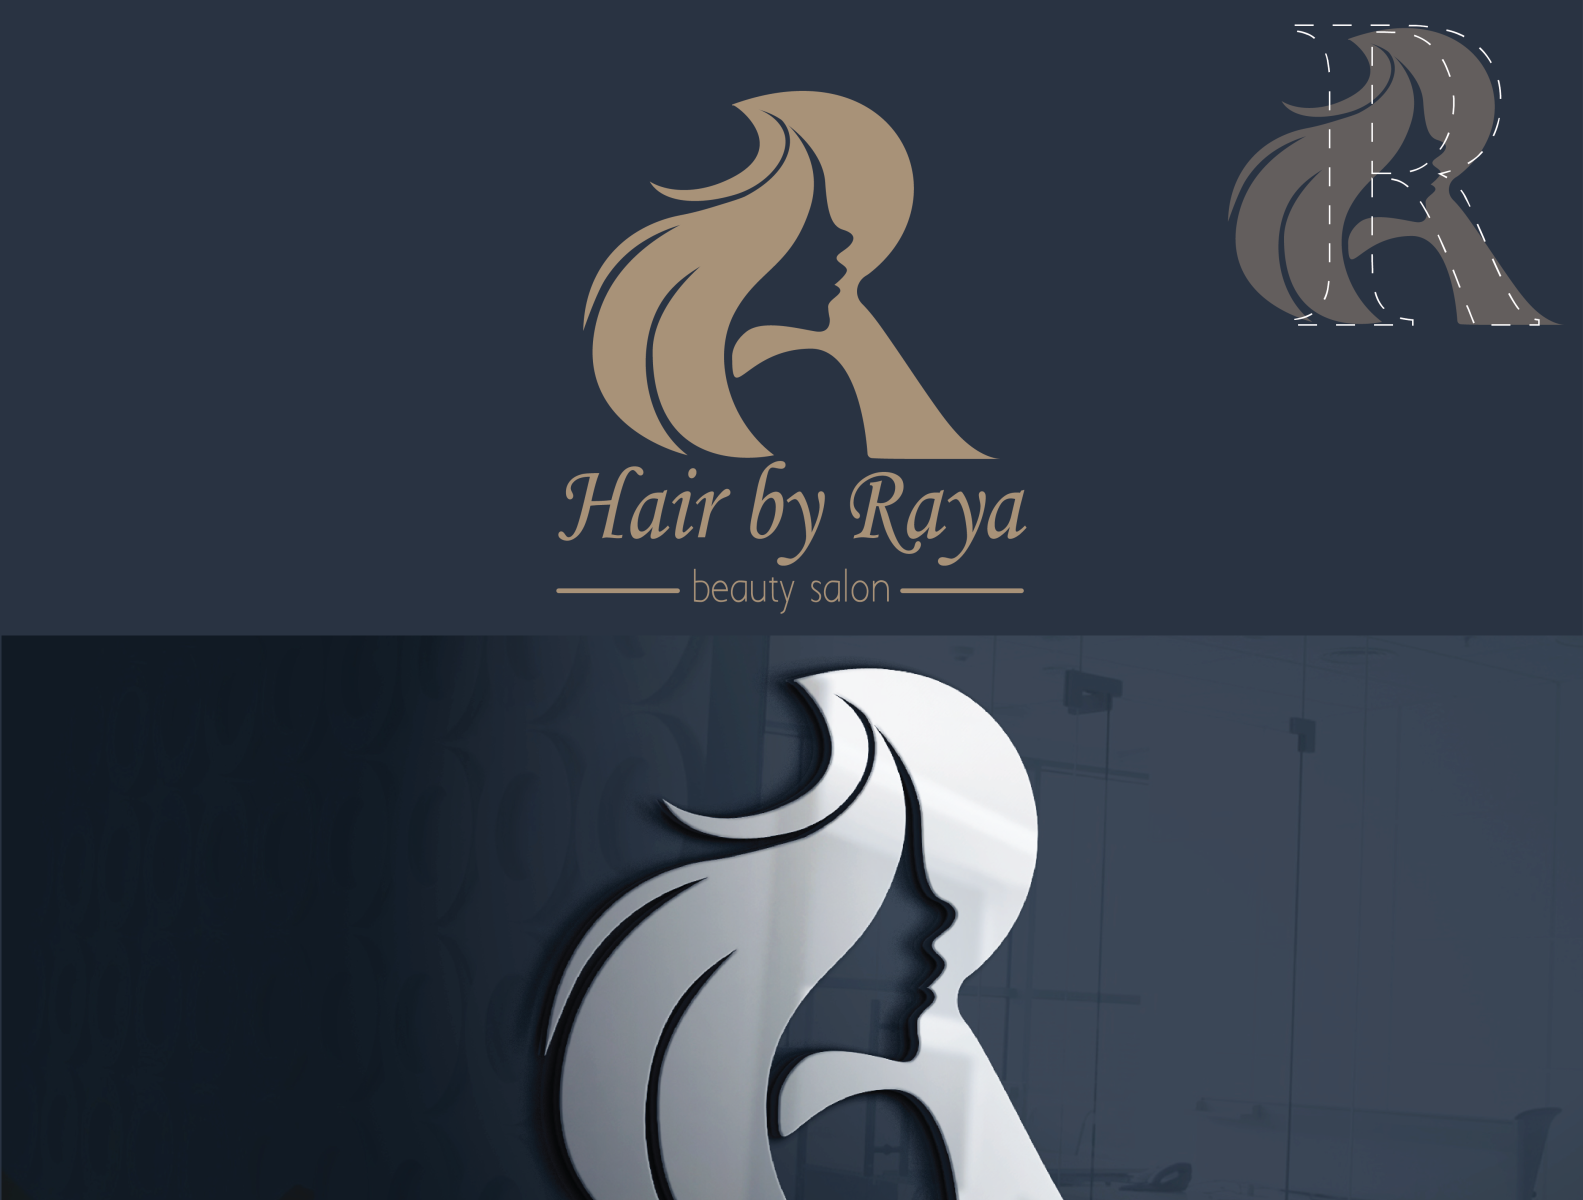 Hair by Raya by nur hamid on Dribbble